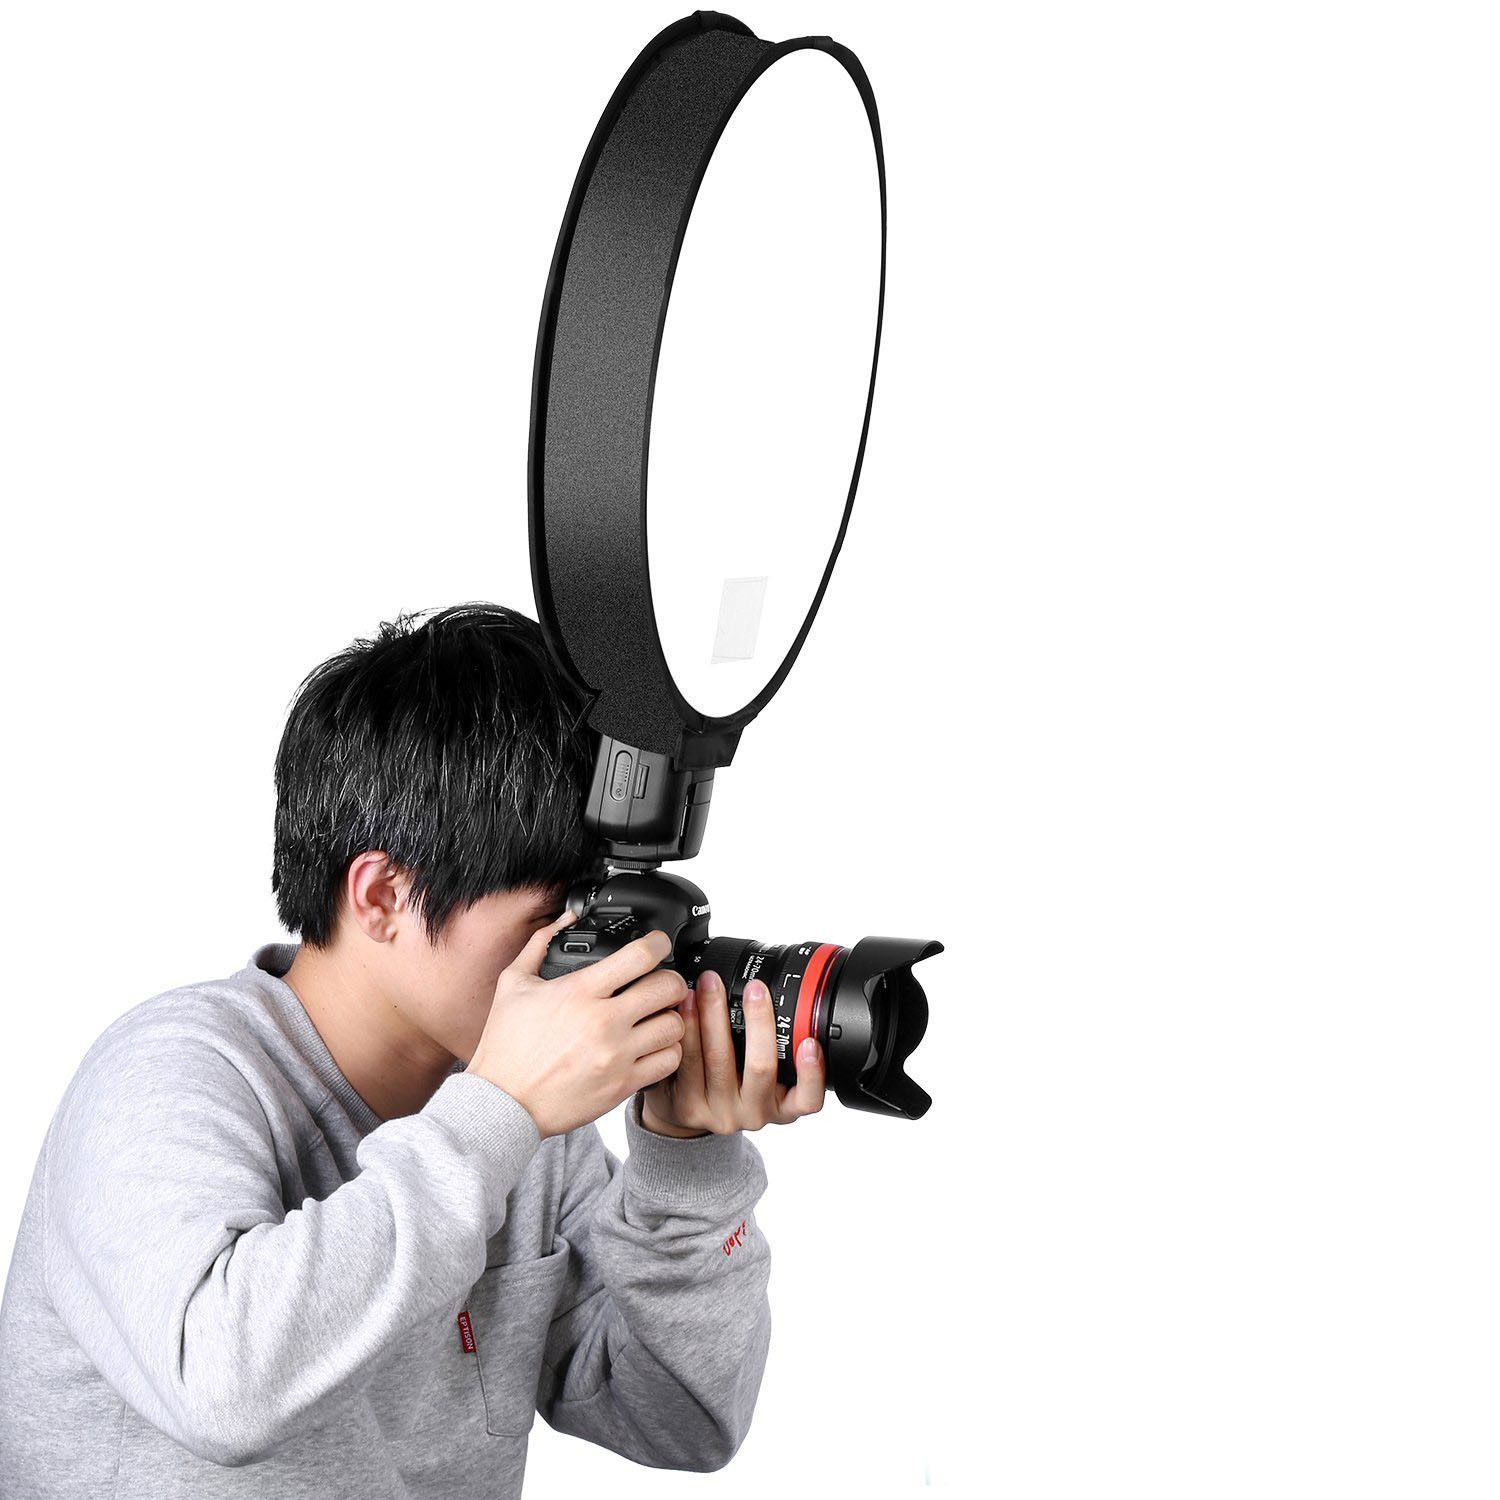 30cm40cm-Softbox-for-Photography-Yongnuo-Video-Flash-Light-Photo-Studio-DSLR-Camera-1601201